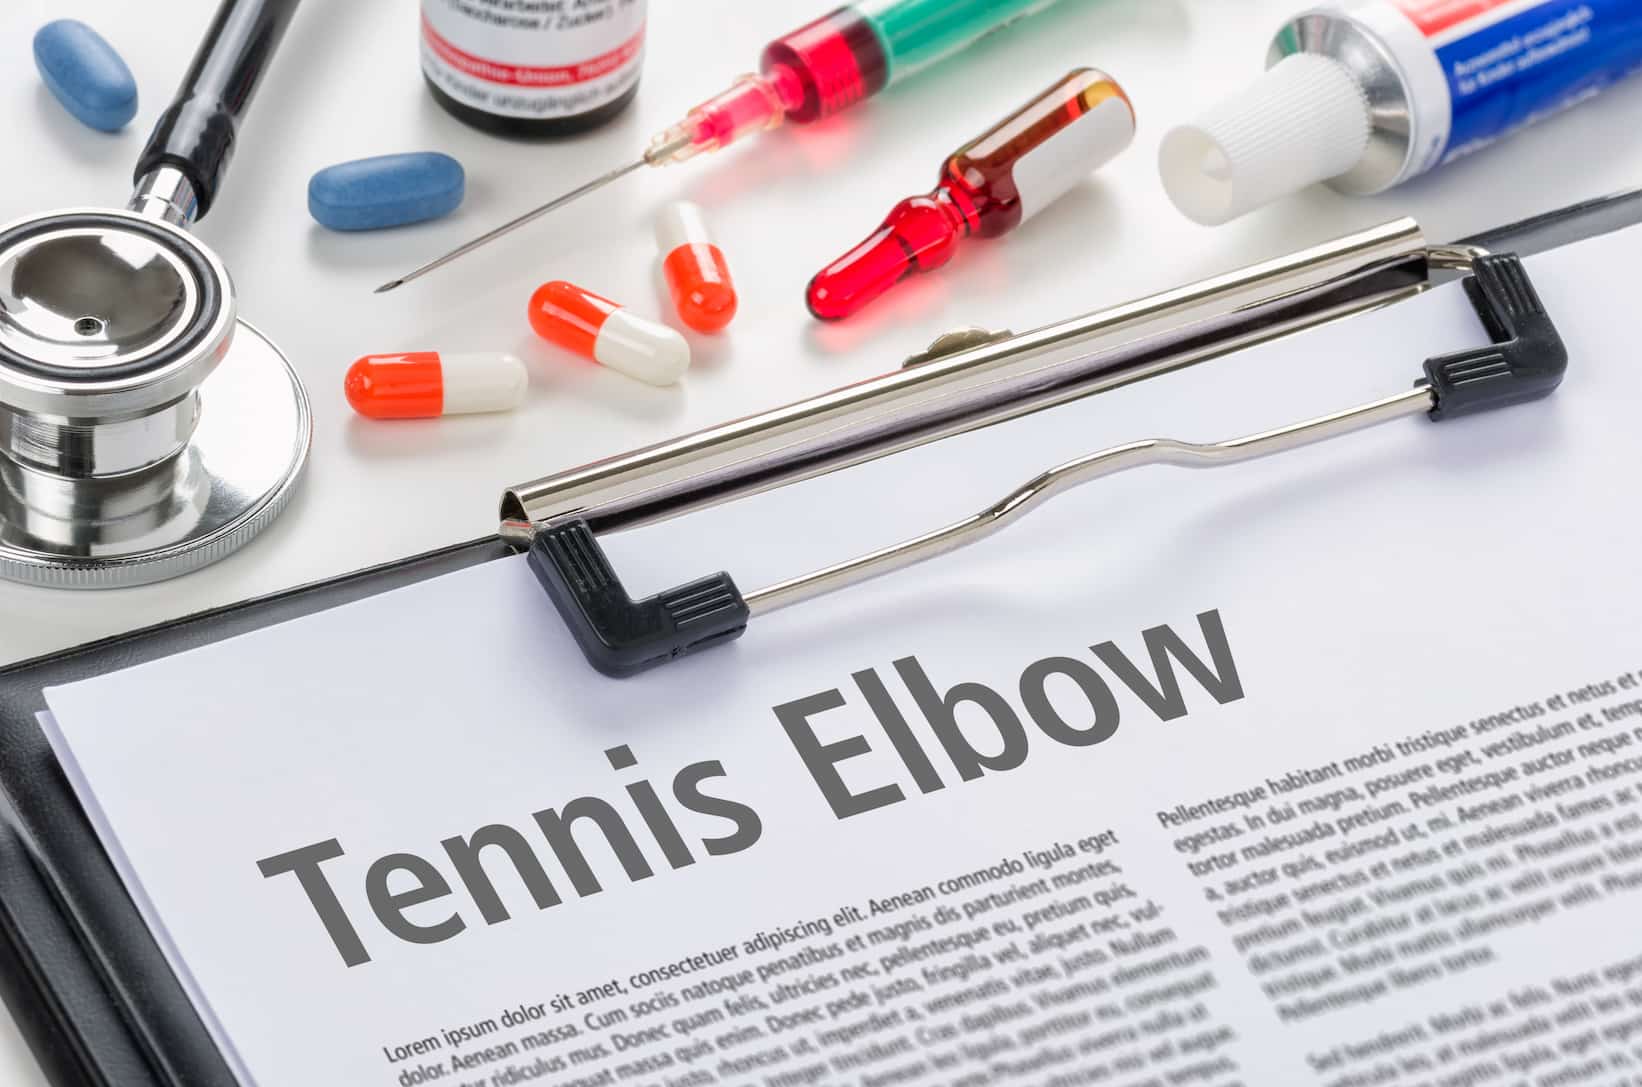 Turkiye tennis elbow surgery procedure